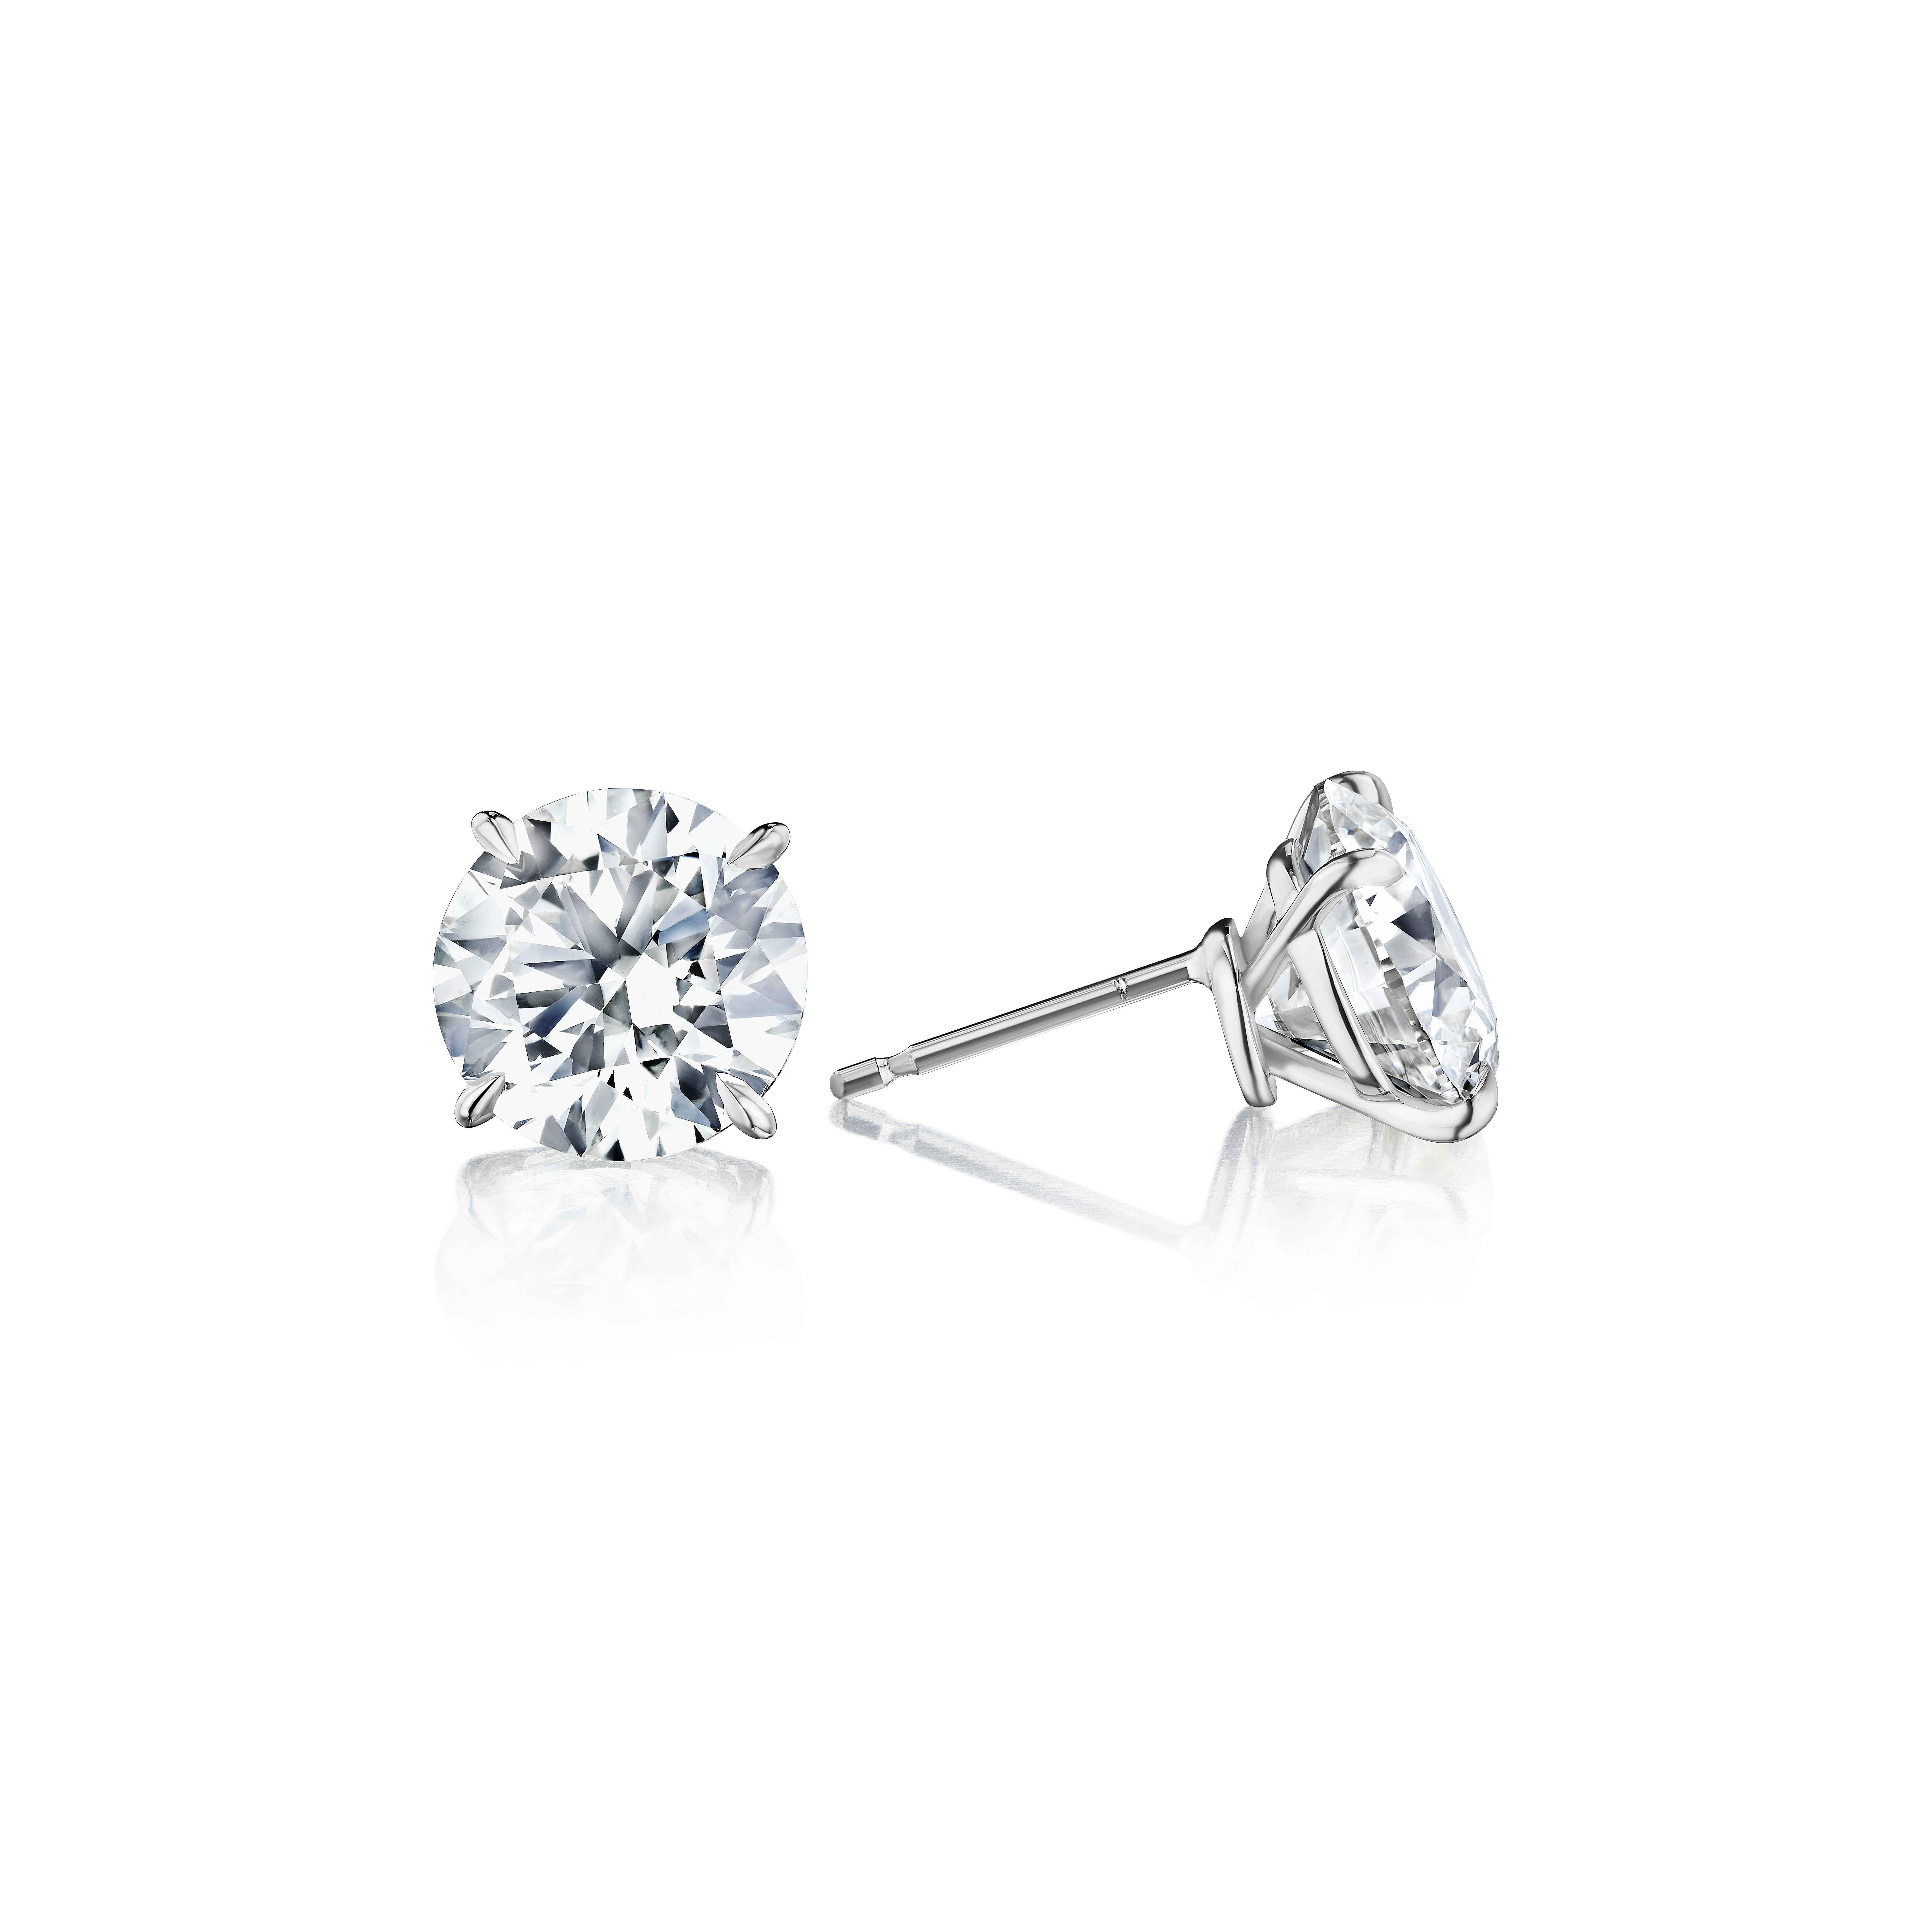 10 carat diamond studs